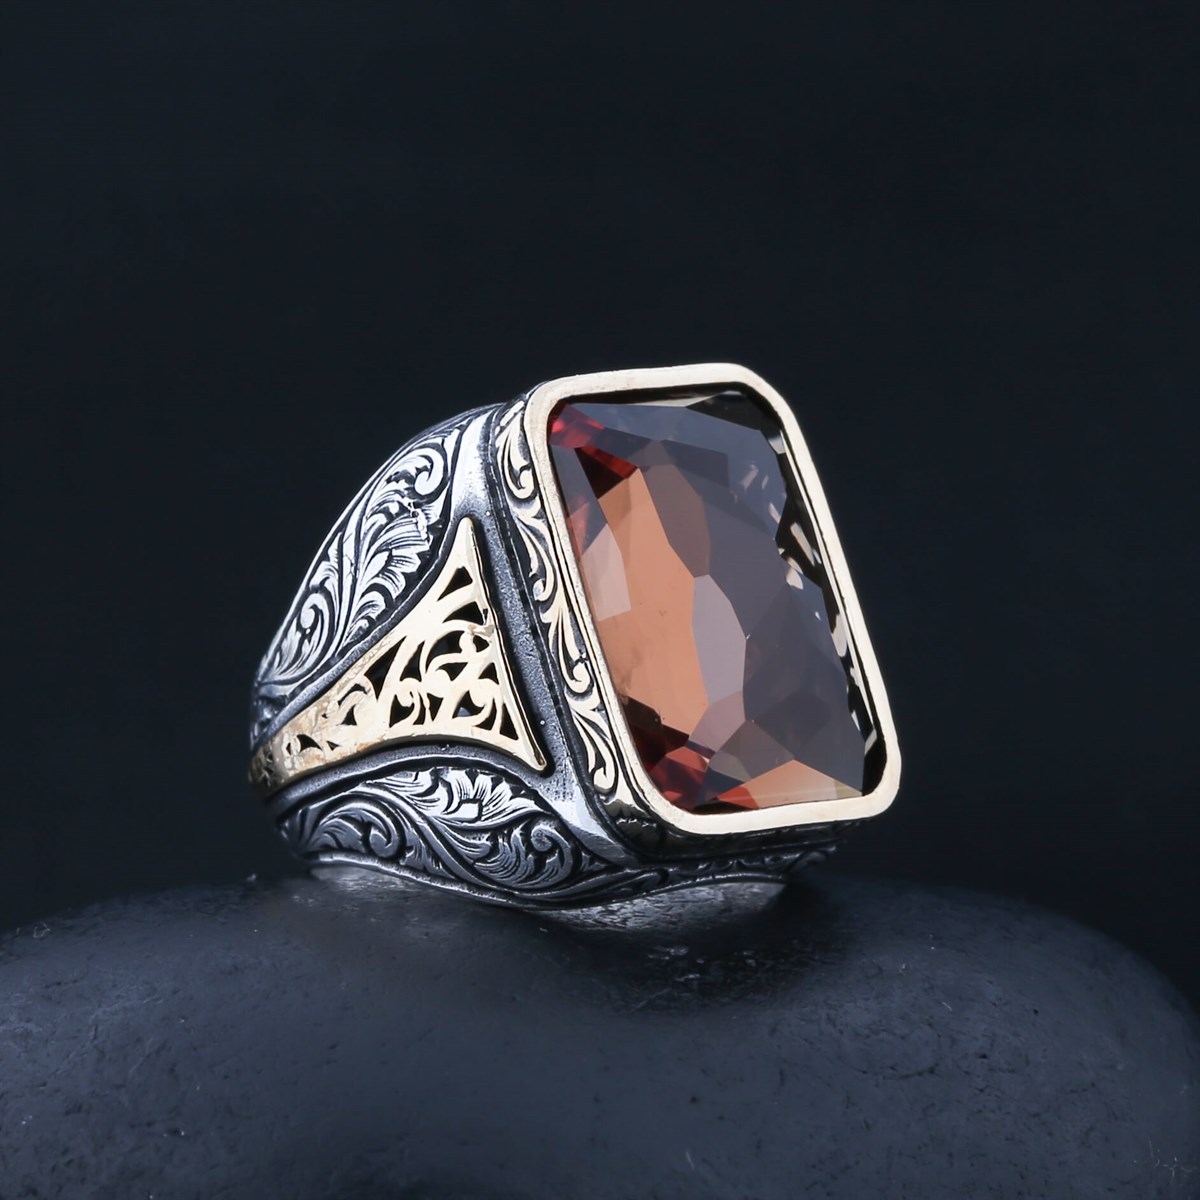 Blackened Zultanite Stone Motif Sterling Silver Men's Ring